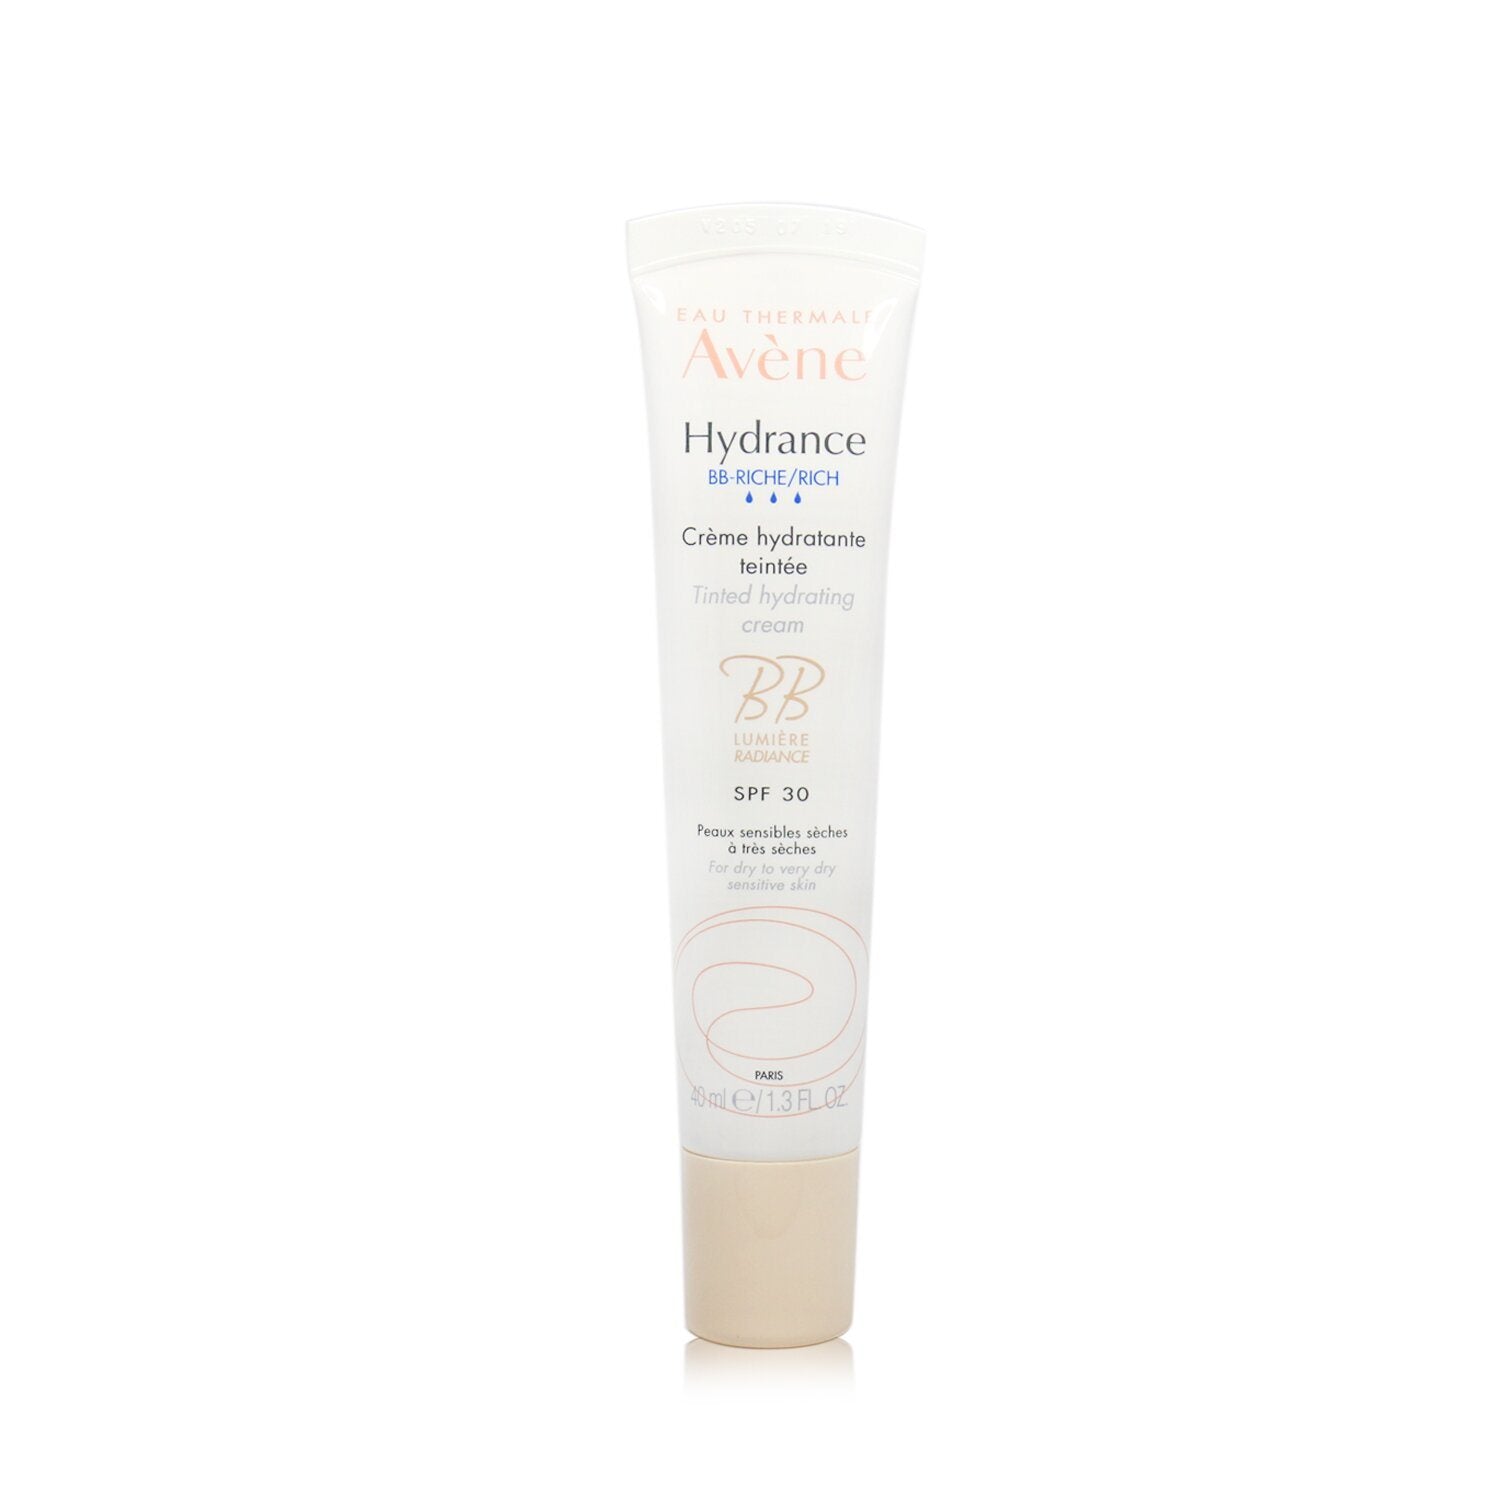 AVENE - Hydrance BB-RICH Tinted Hydrating Cream SPF 30 - For Dry to Very Dry Sensitive Skin 20876 40ml/1.3oz - moisturizing sunscreen for sensitive skin.